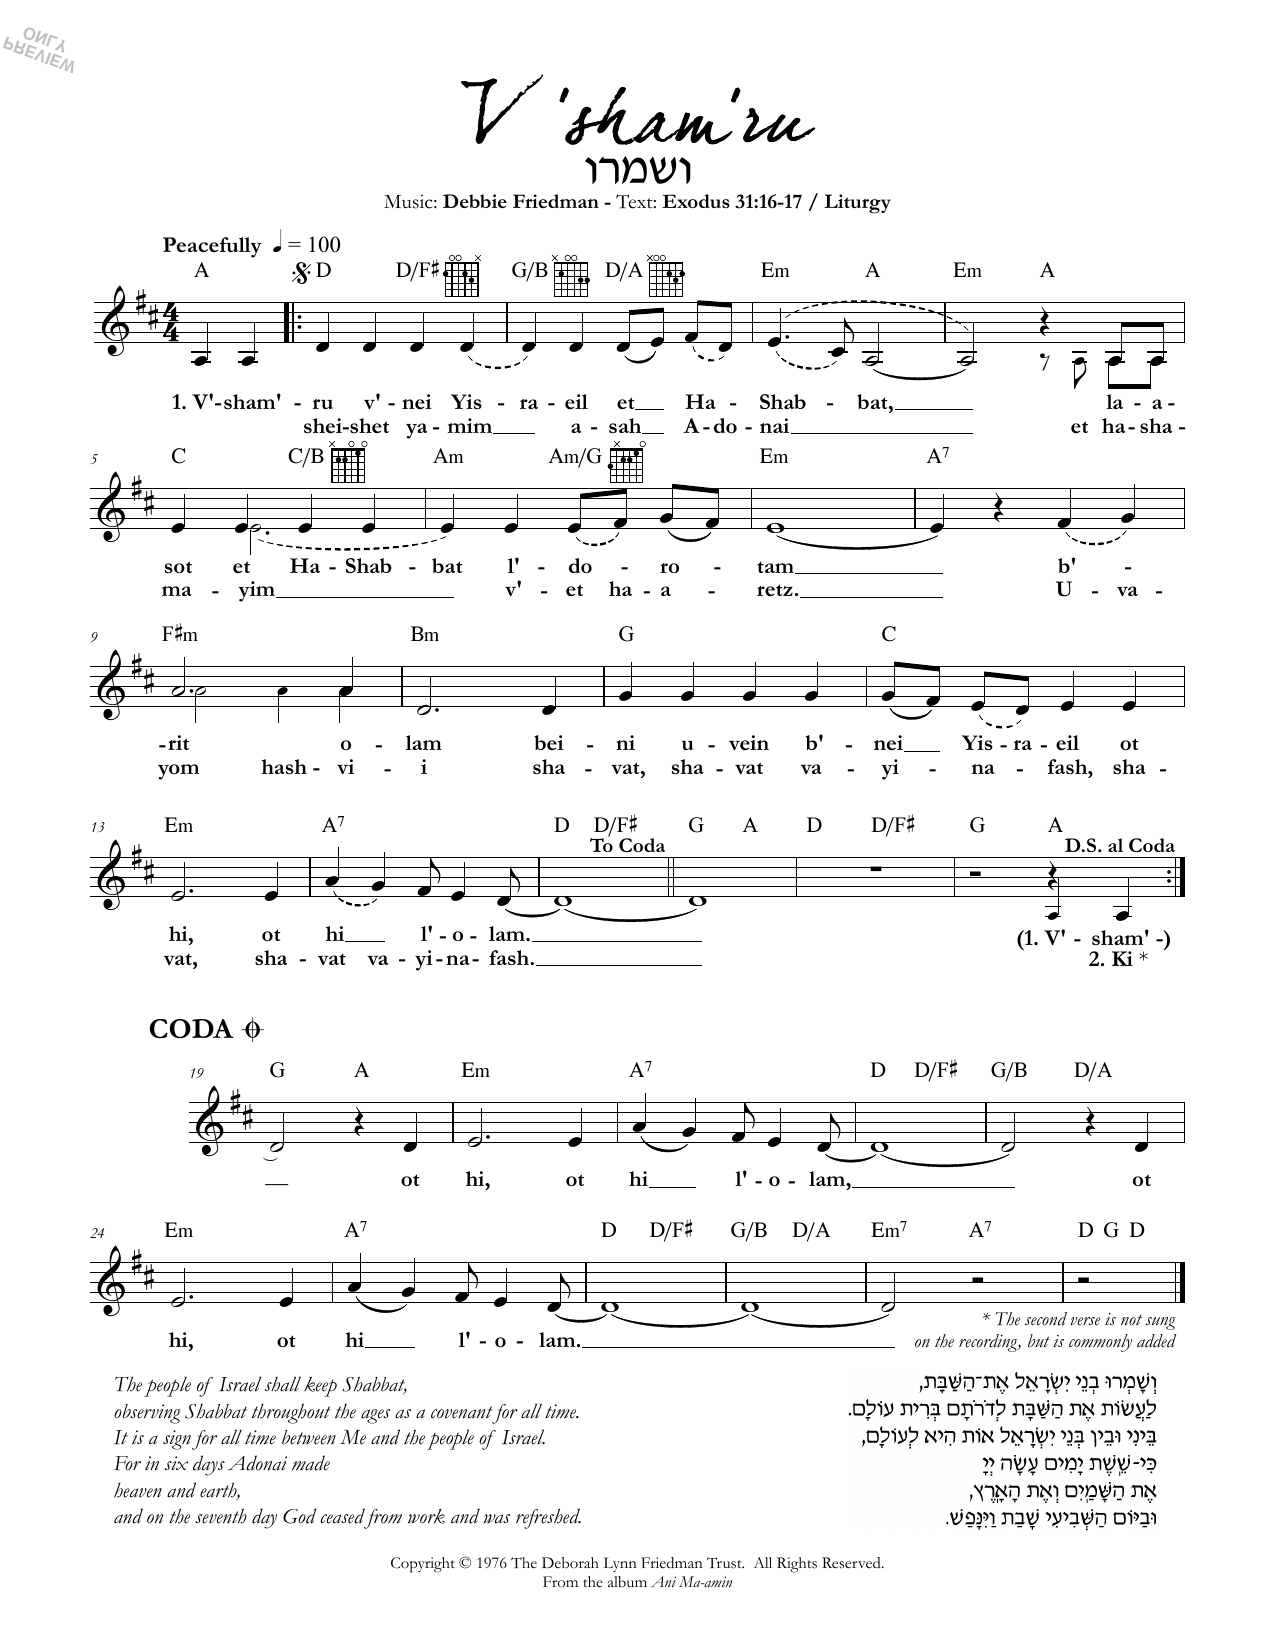 Download Debbie Friedman V'sham'ru Sheet Music and learn how to play Lead Sheet / Fake Book PDF digital score in minutes